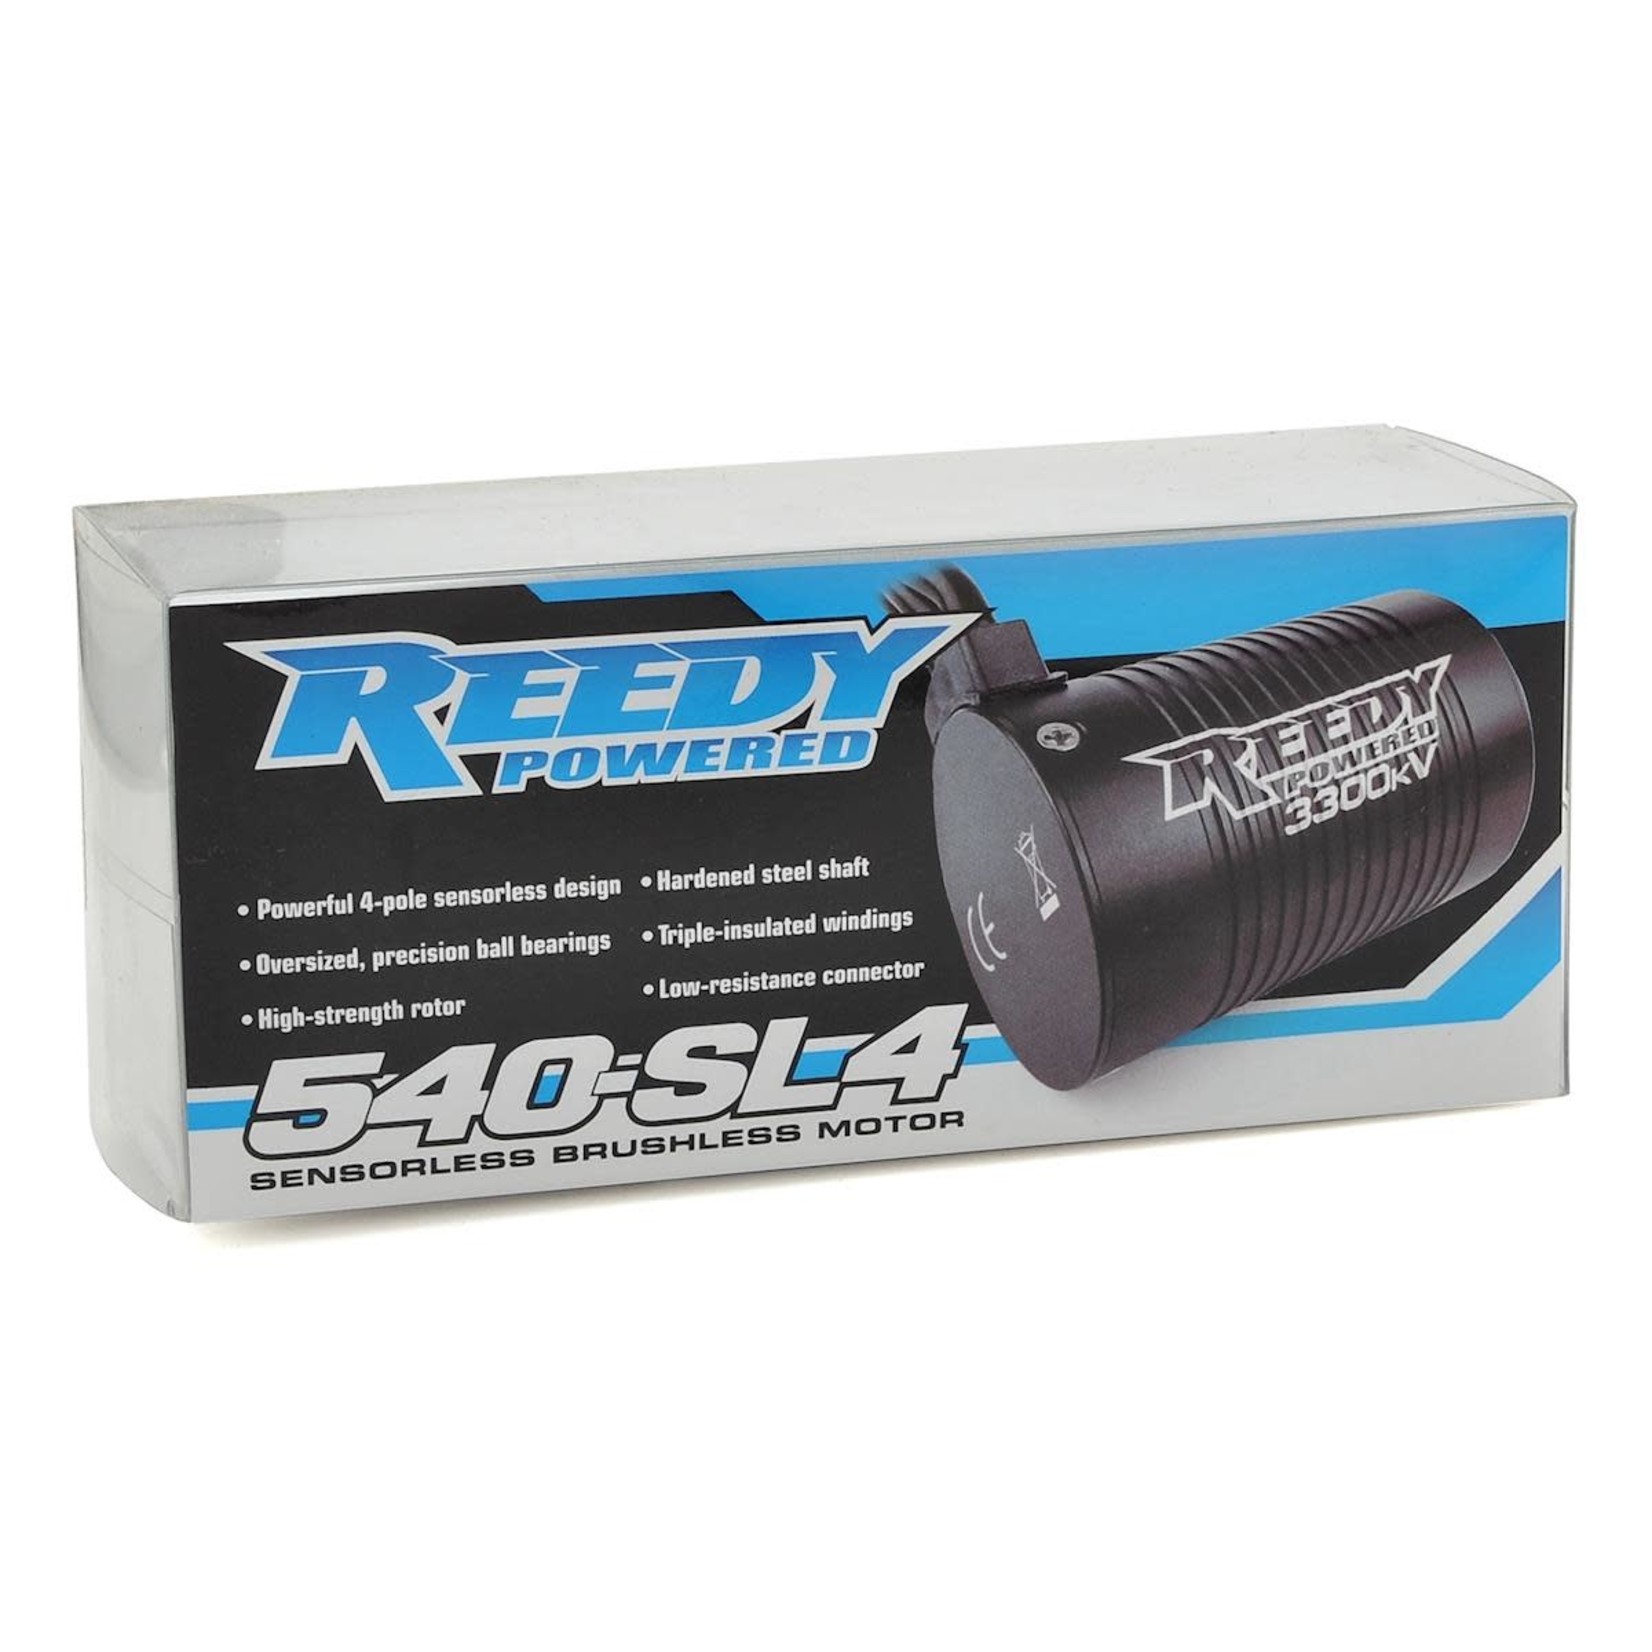 Reedy Reedy 540-SL4 Sensorless 4-Pole Brushless Motor (3300kV) #907